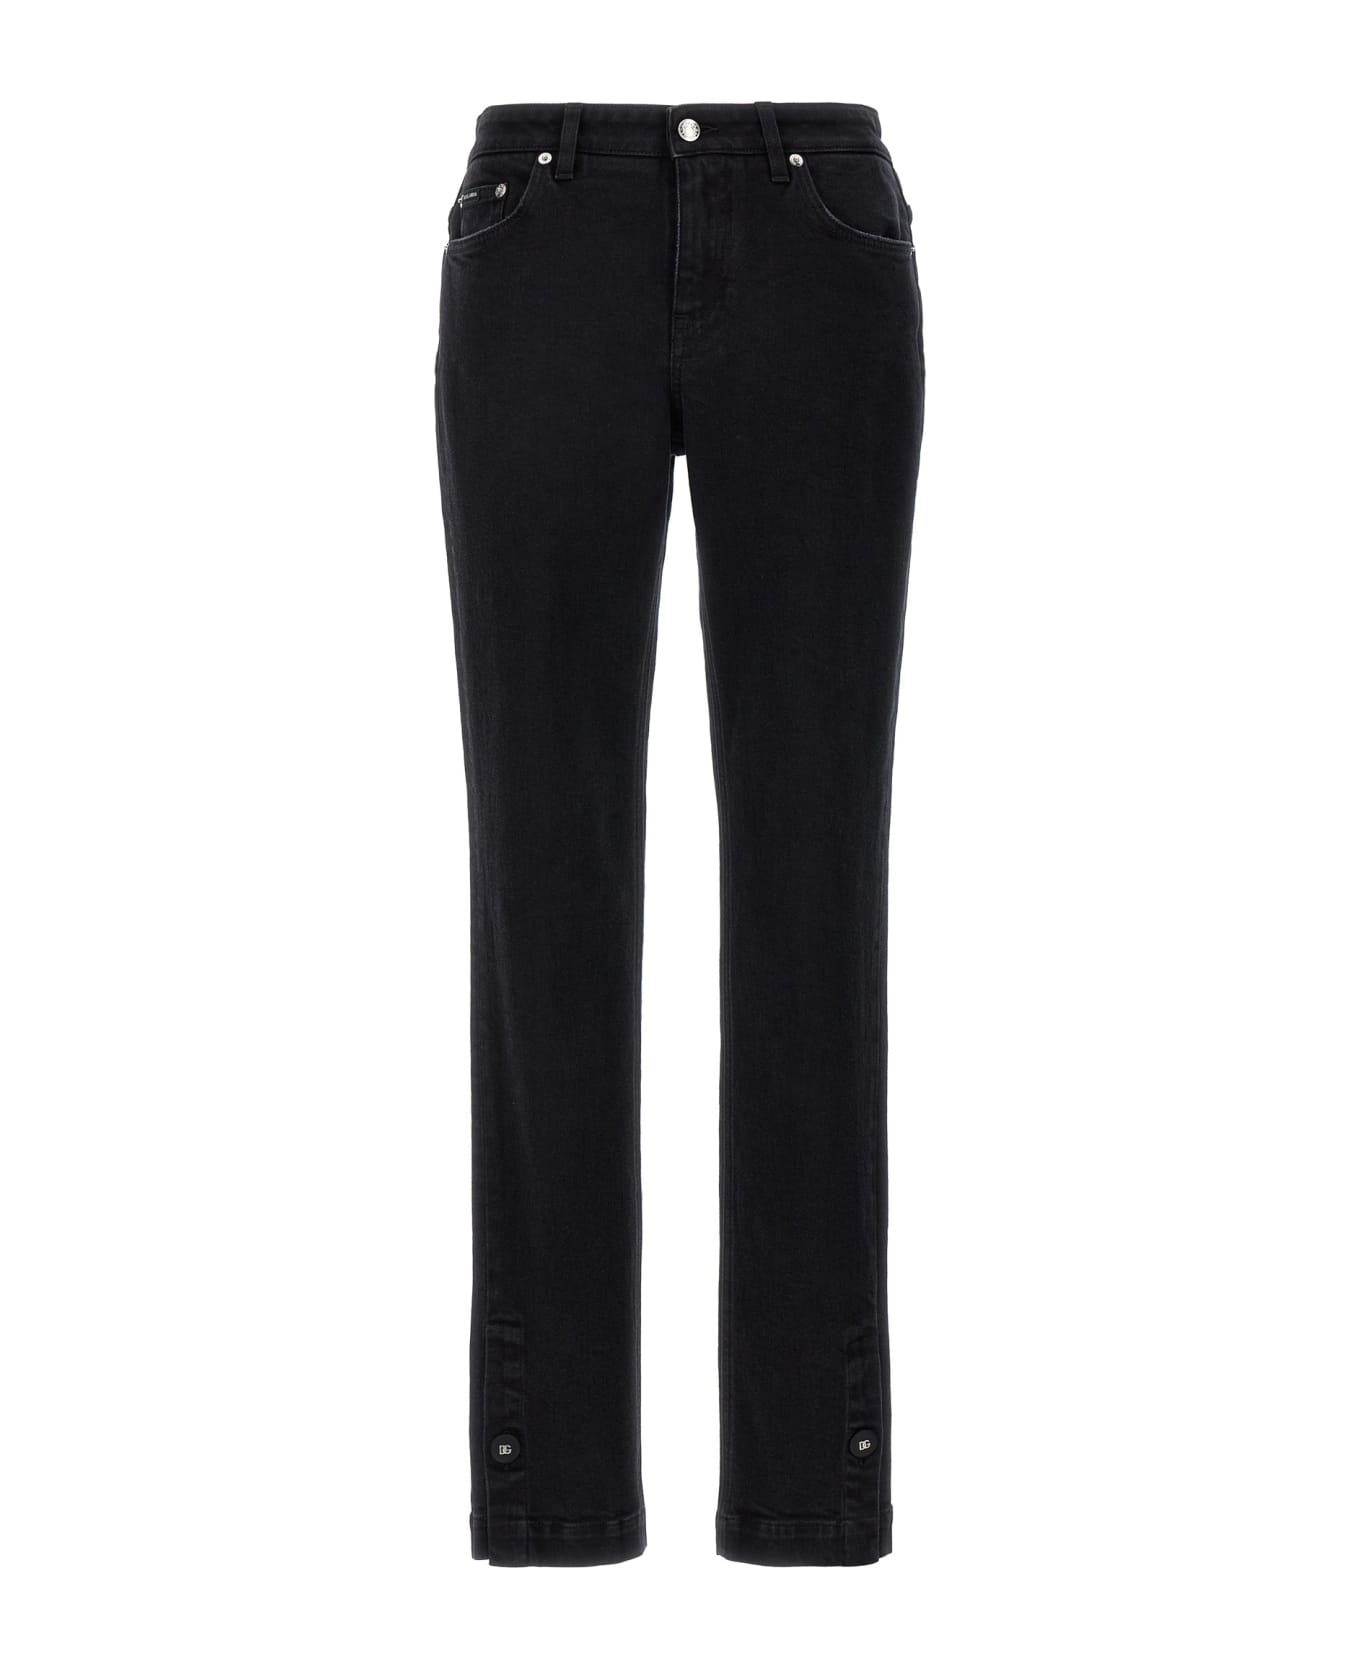 Dolce & Gabbana 'girly' Jeans - Black   デニム